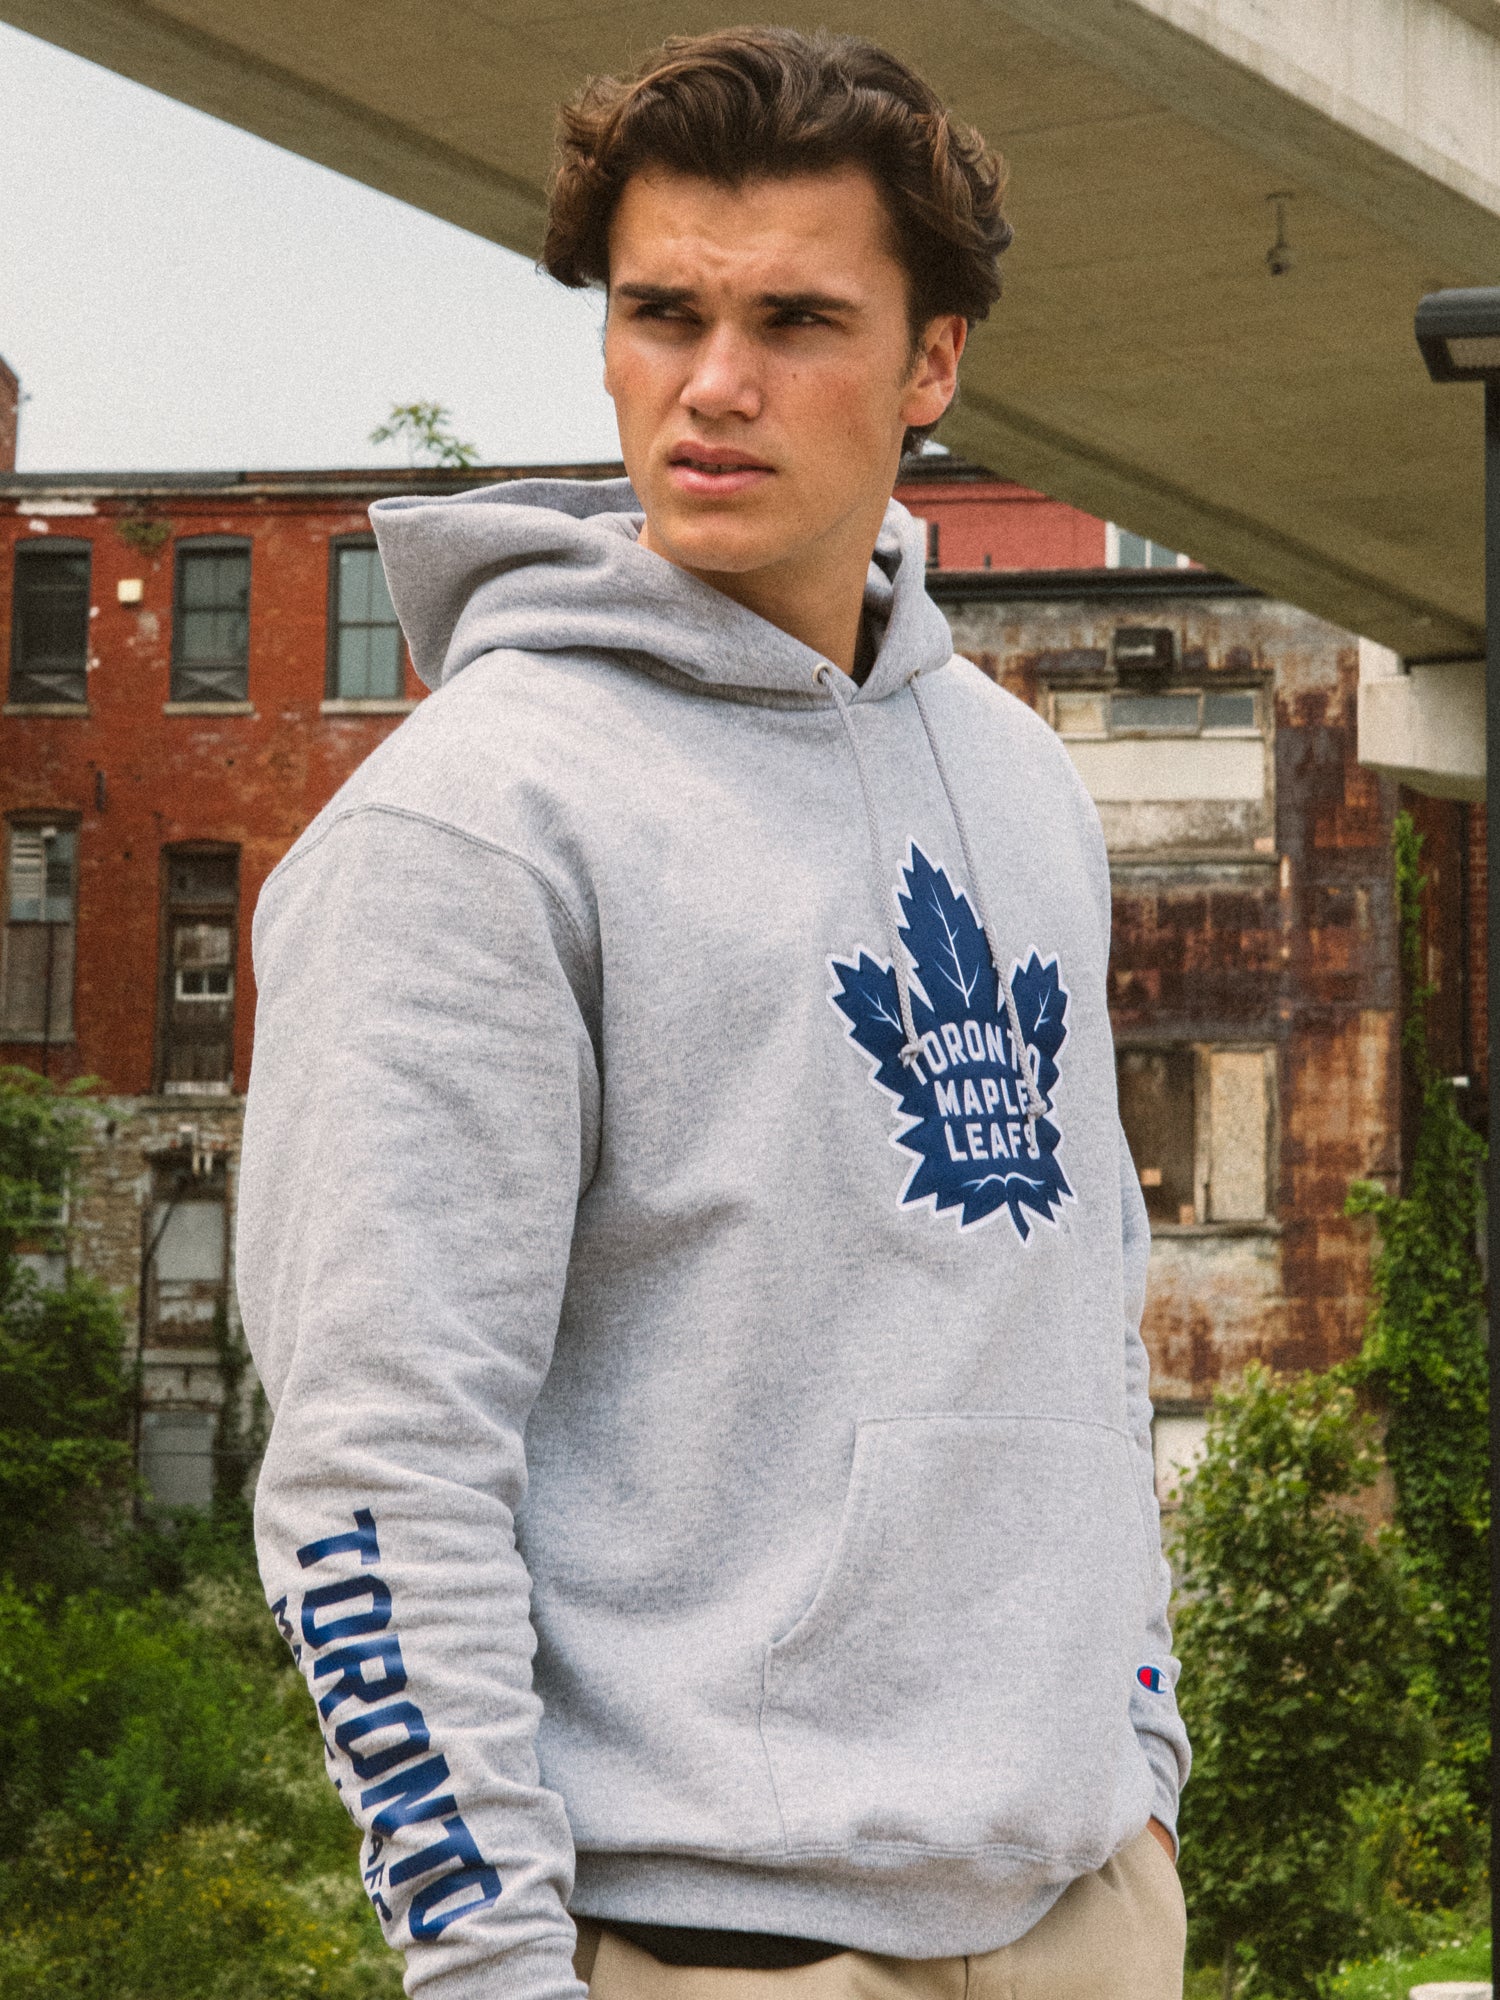 Toronto Maple Leafs Sweatshirts in Toronto Maple Leafs Team Shop